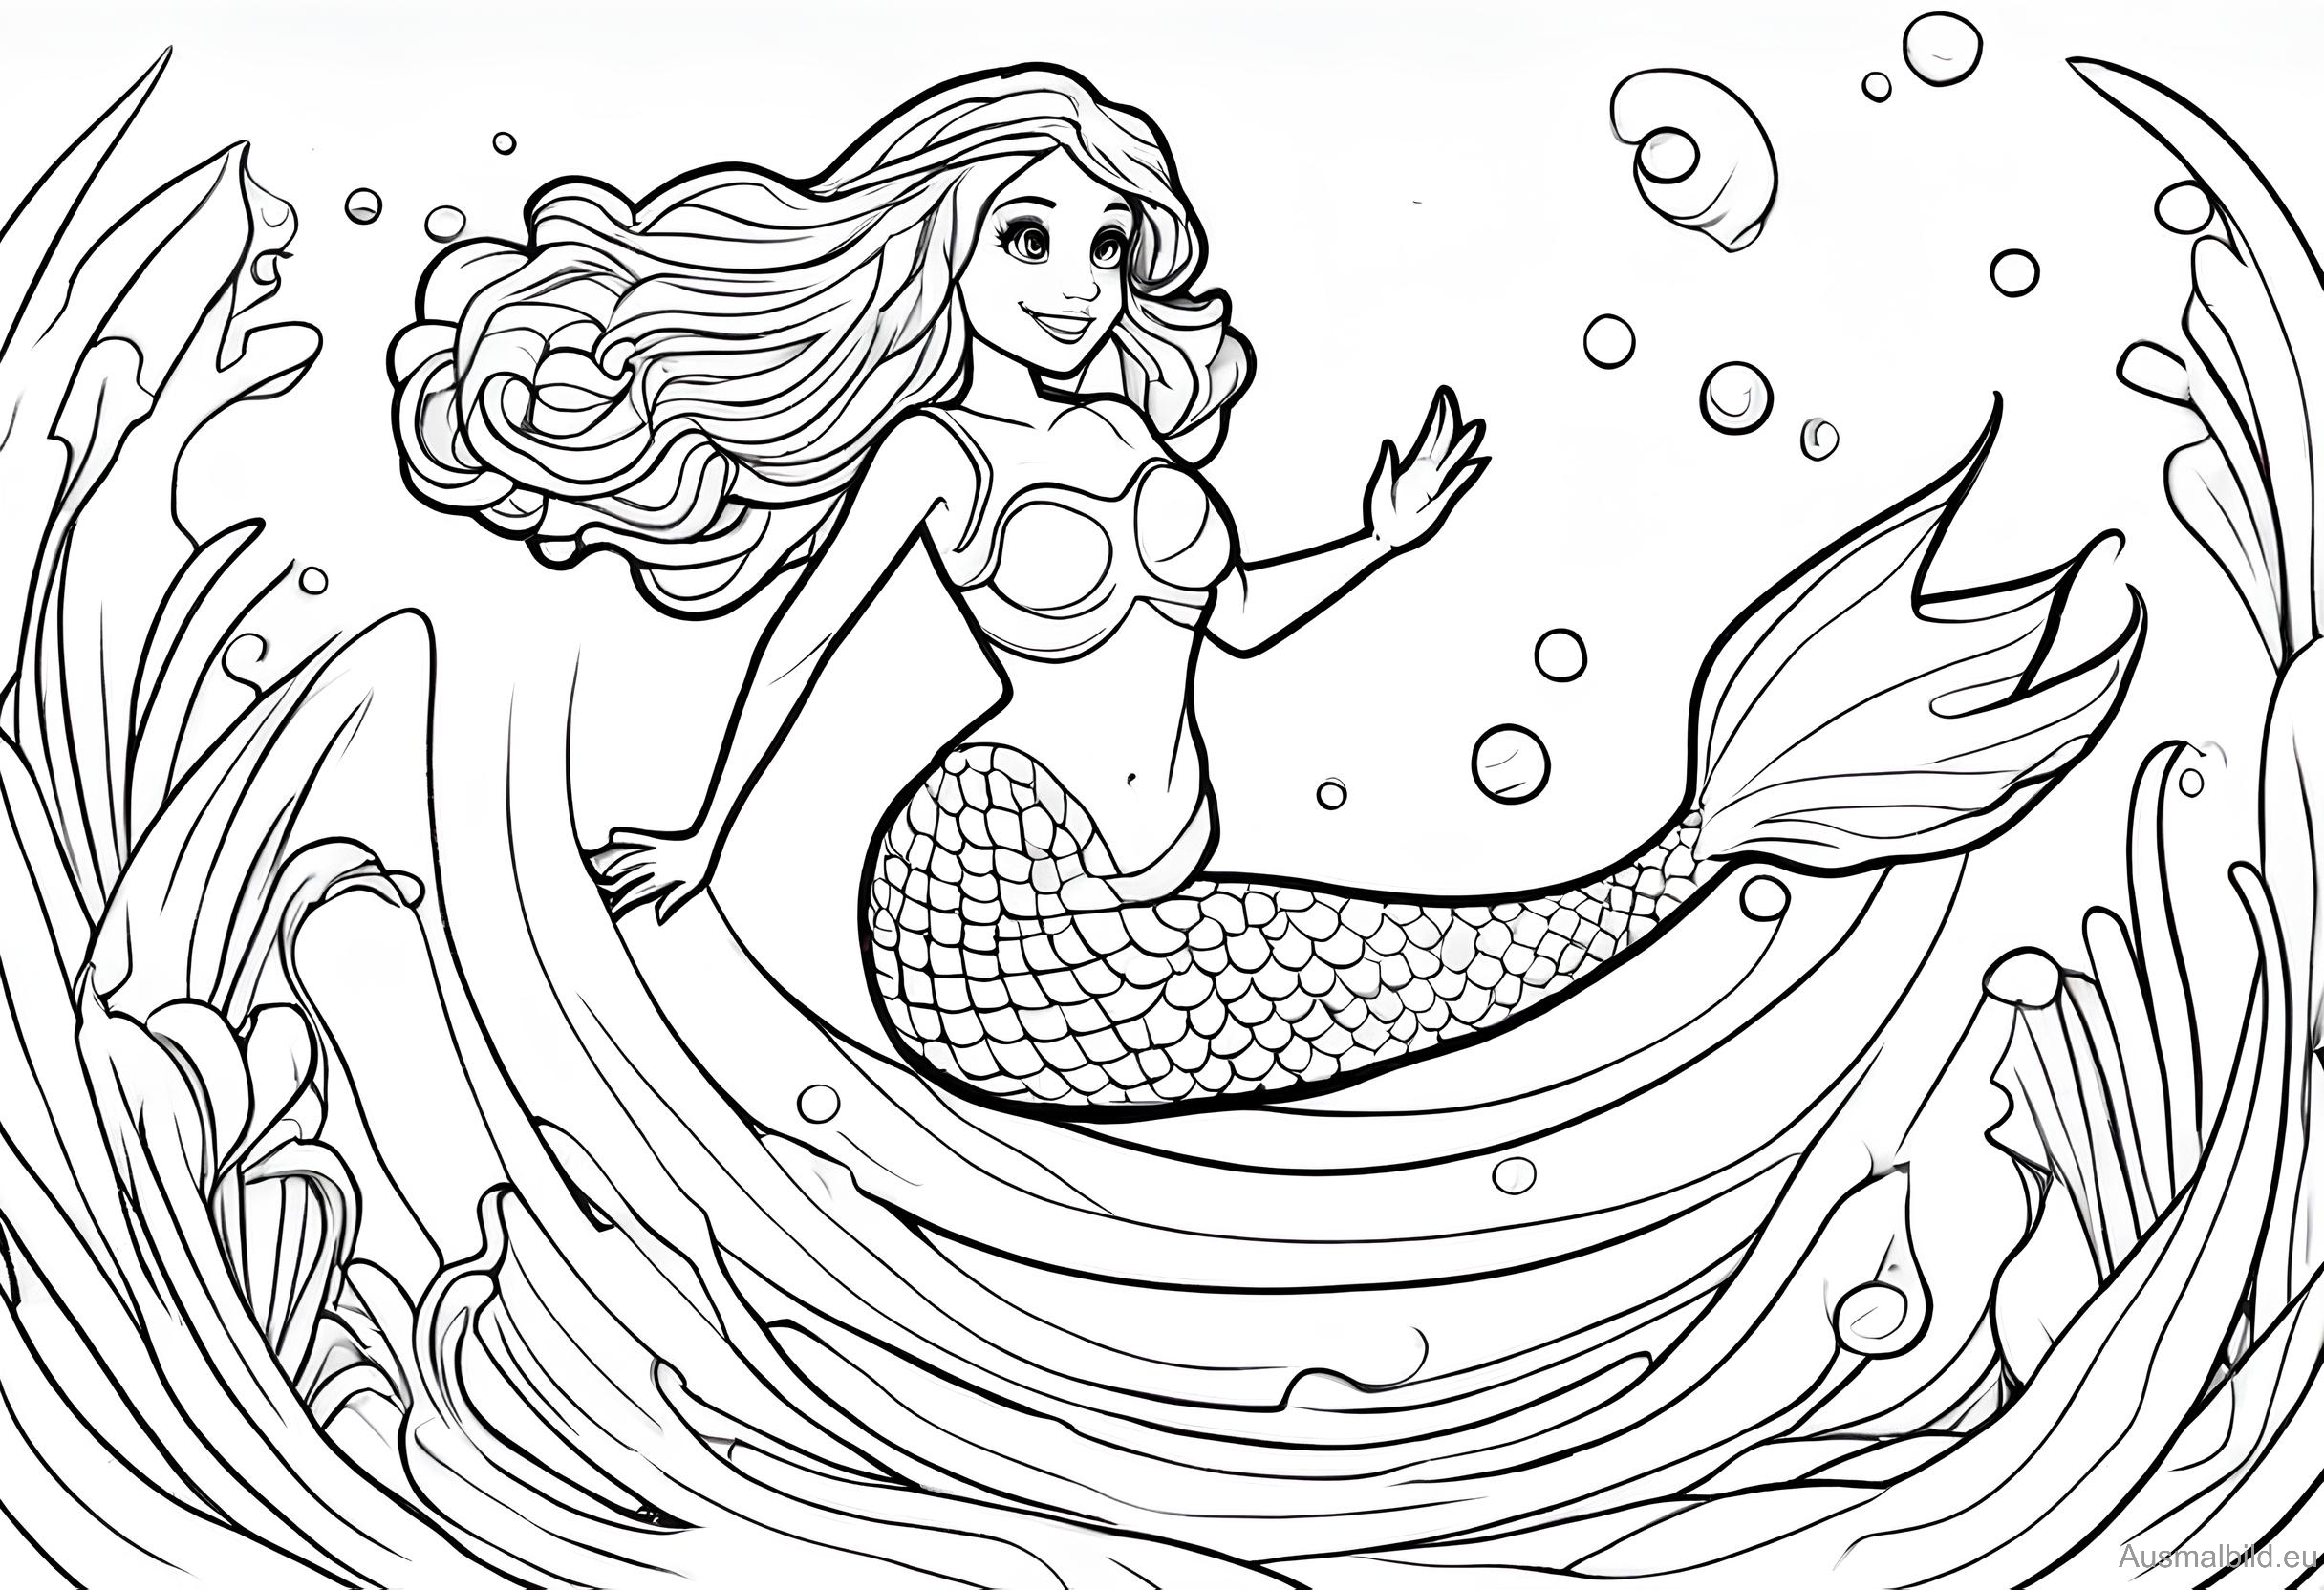 Meerjungfrau im Wasser